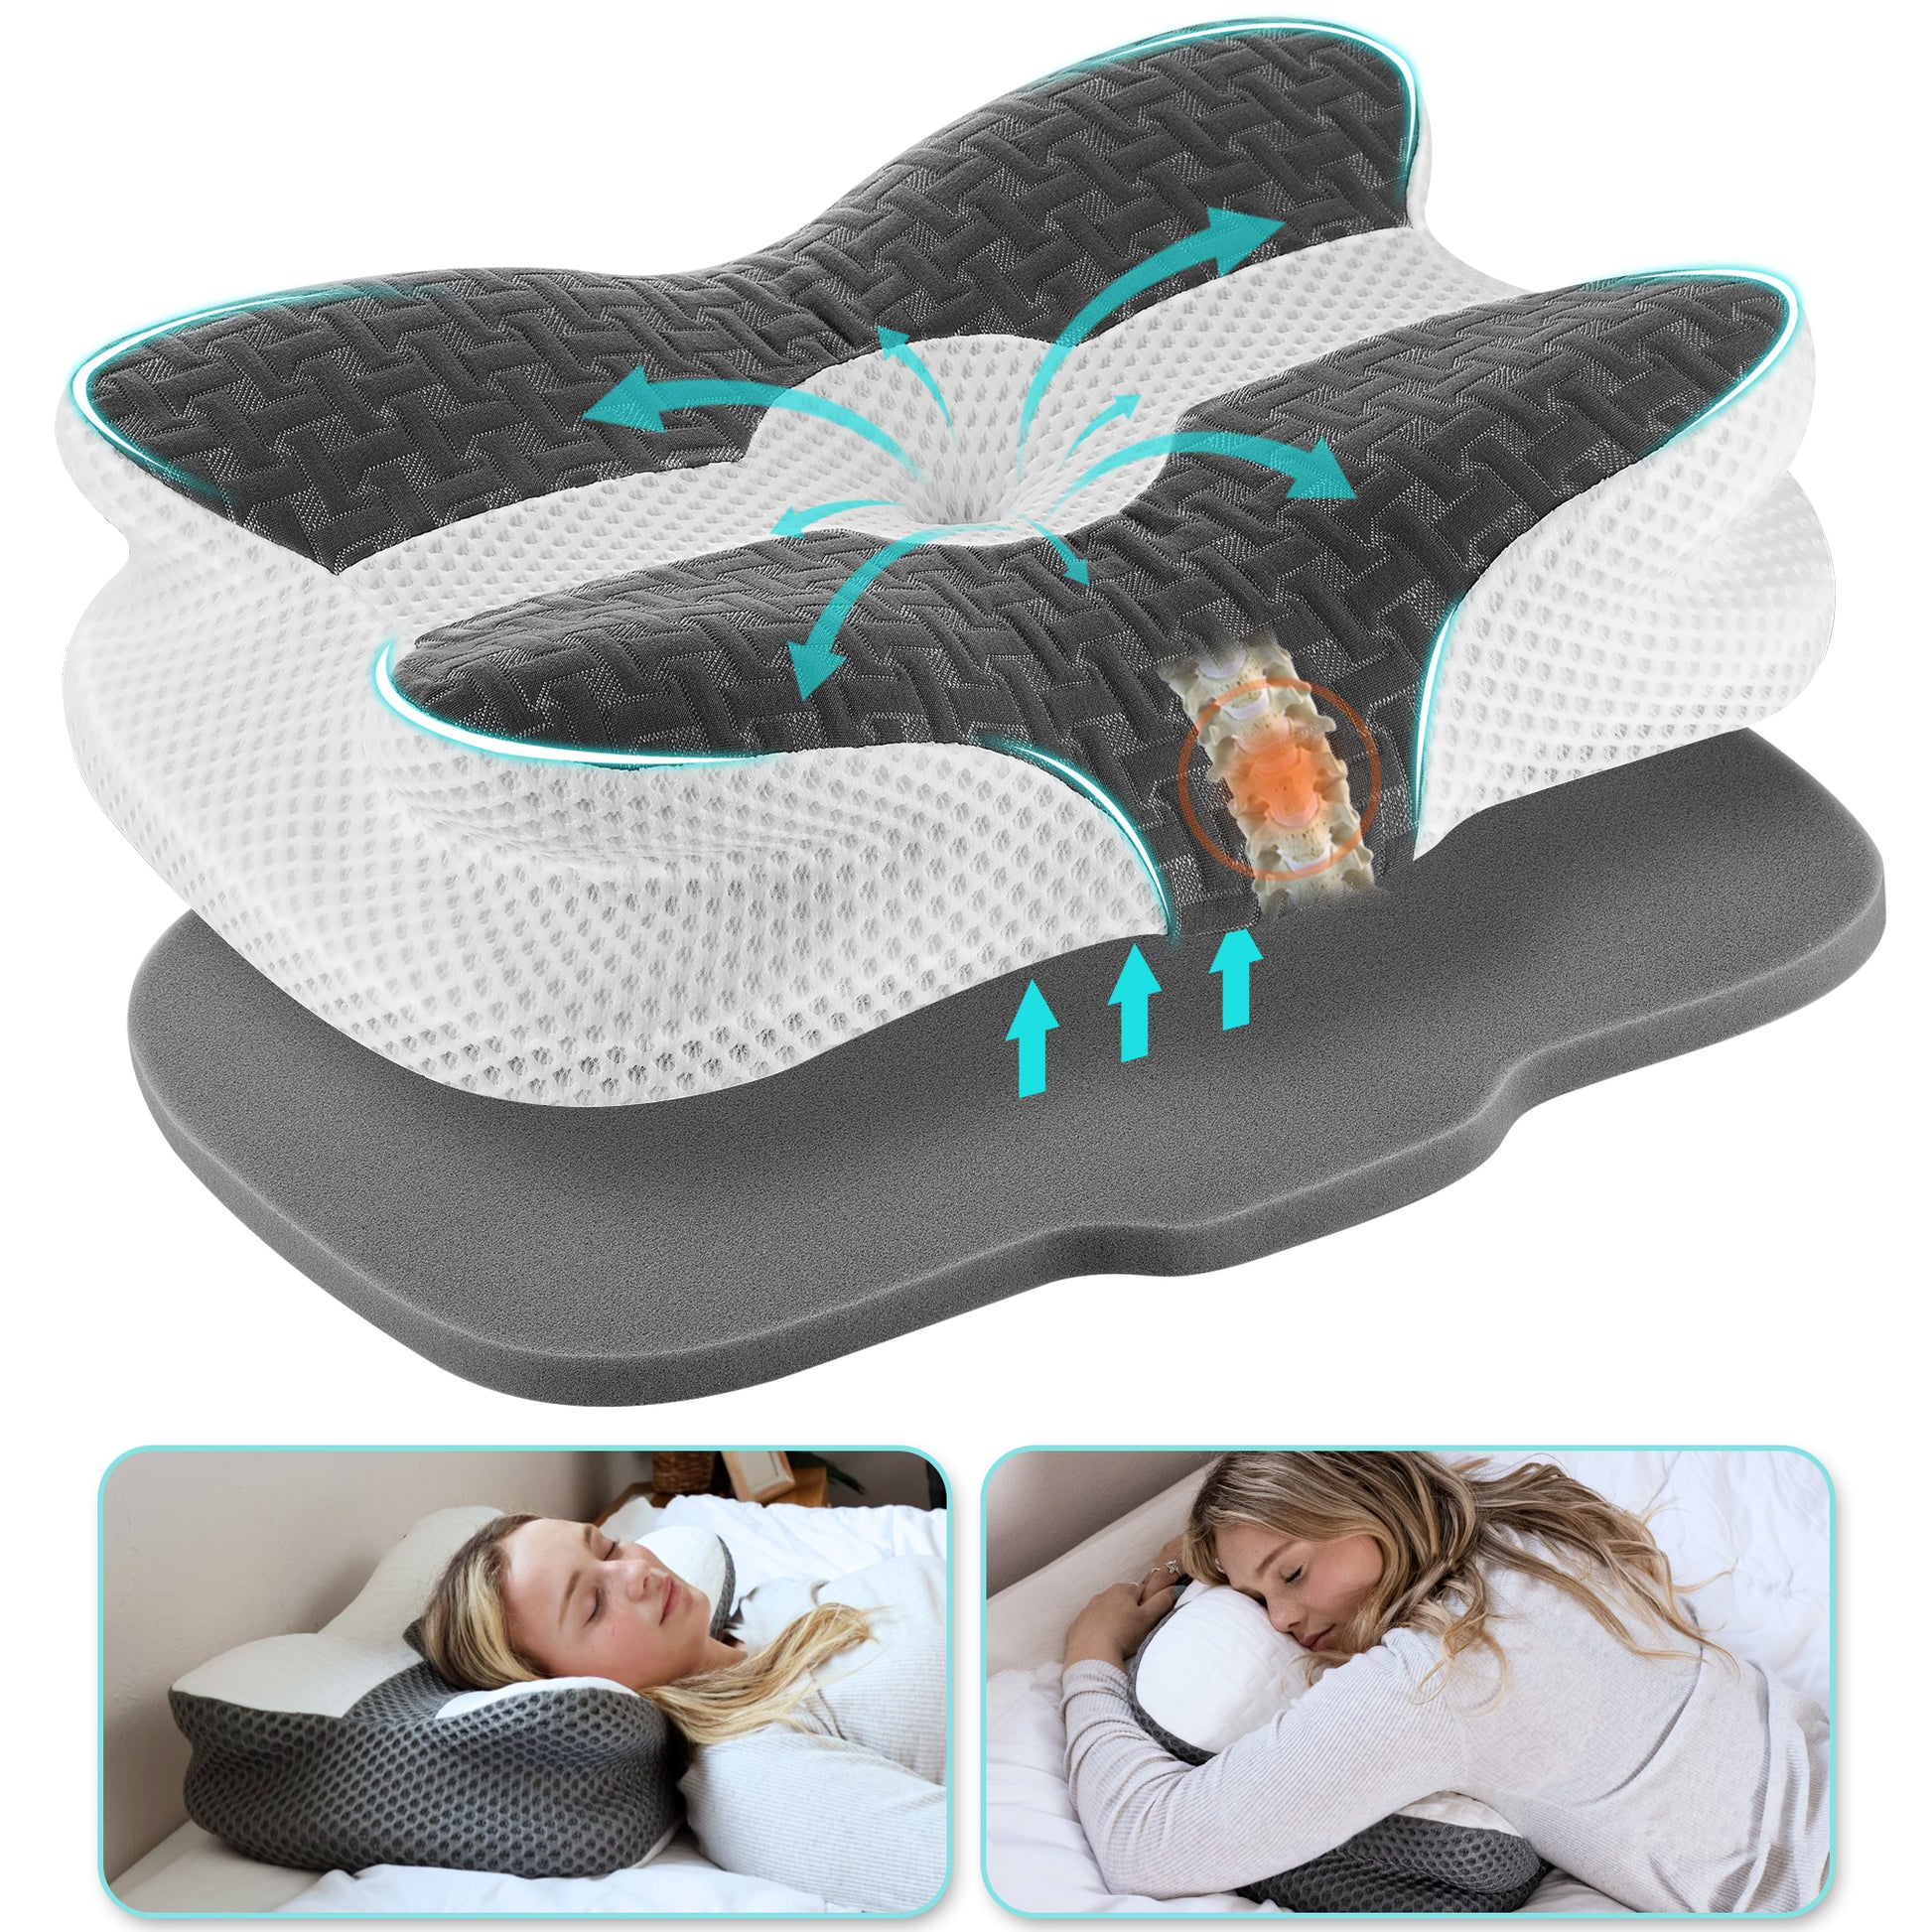 Elviros Adjustable Orthopedic Contour Memory Foam Pillow-4